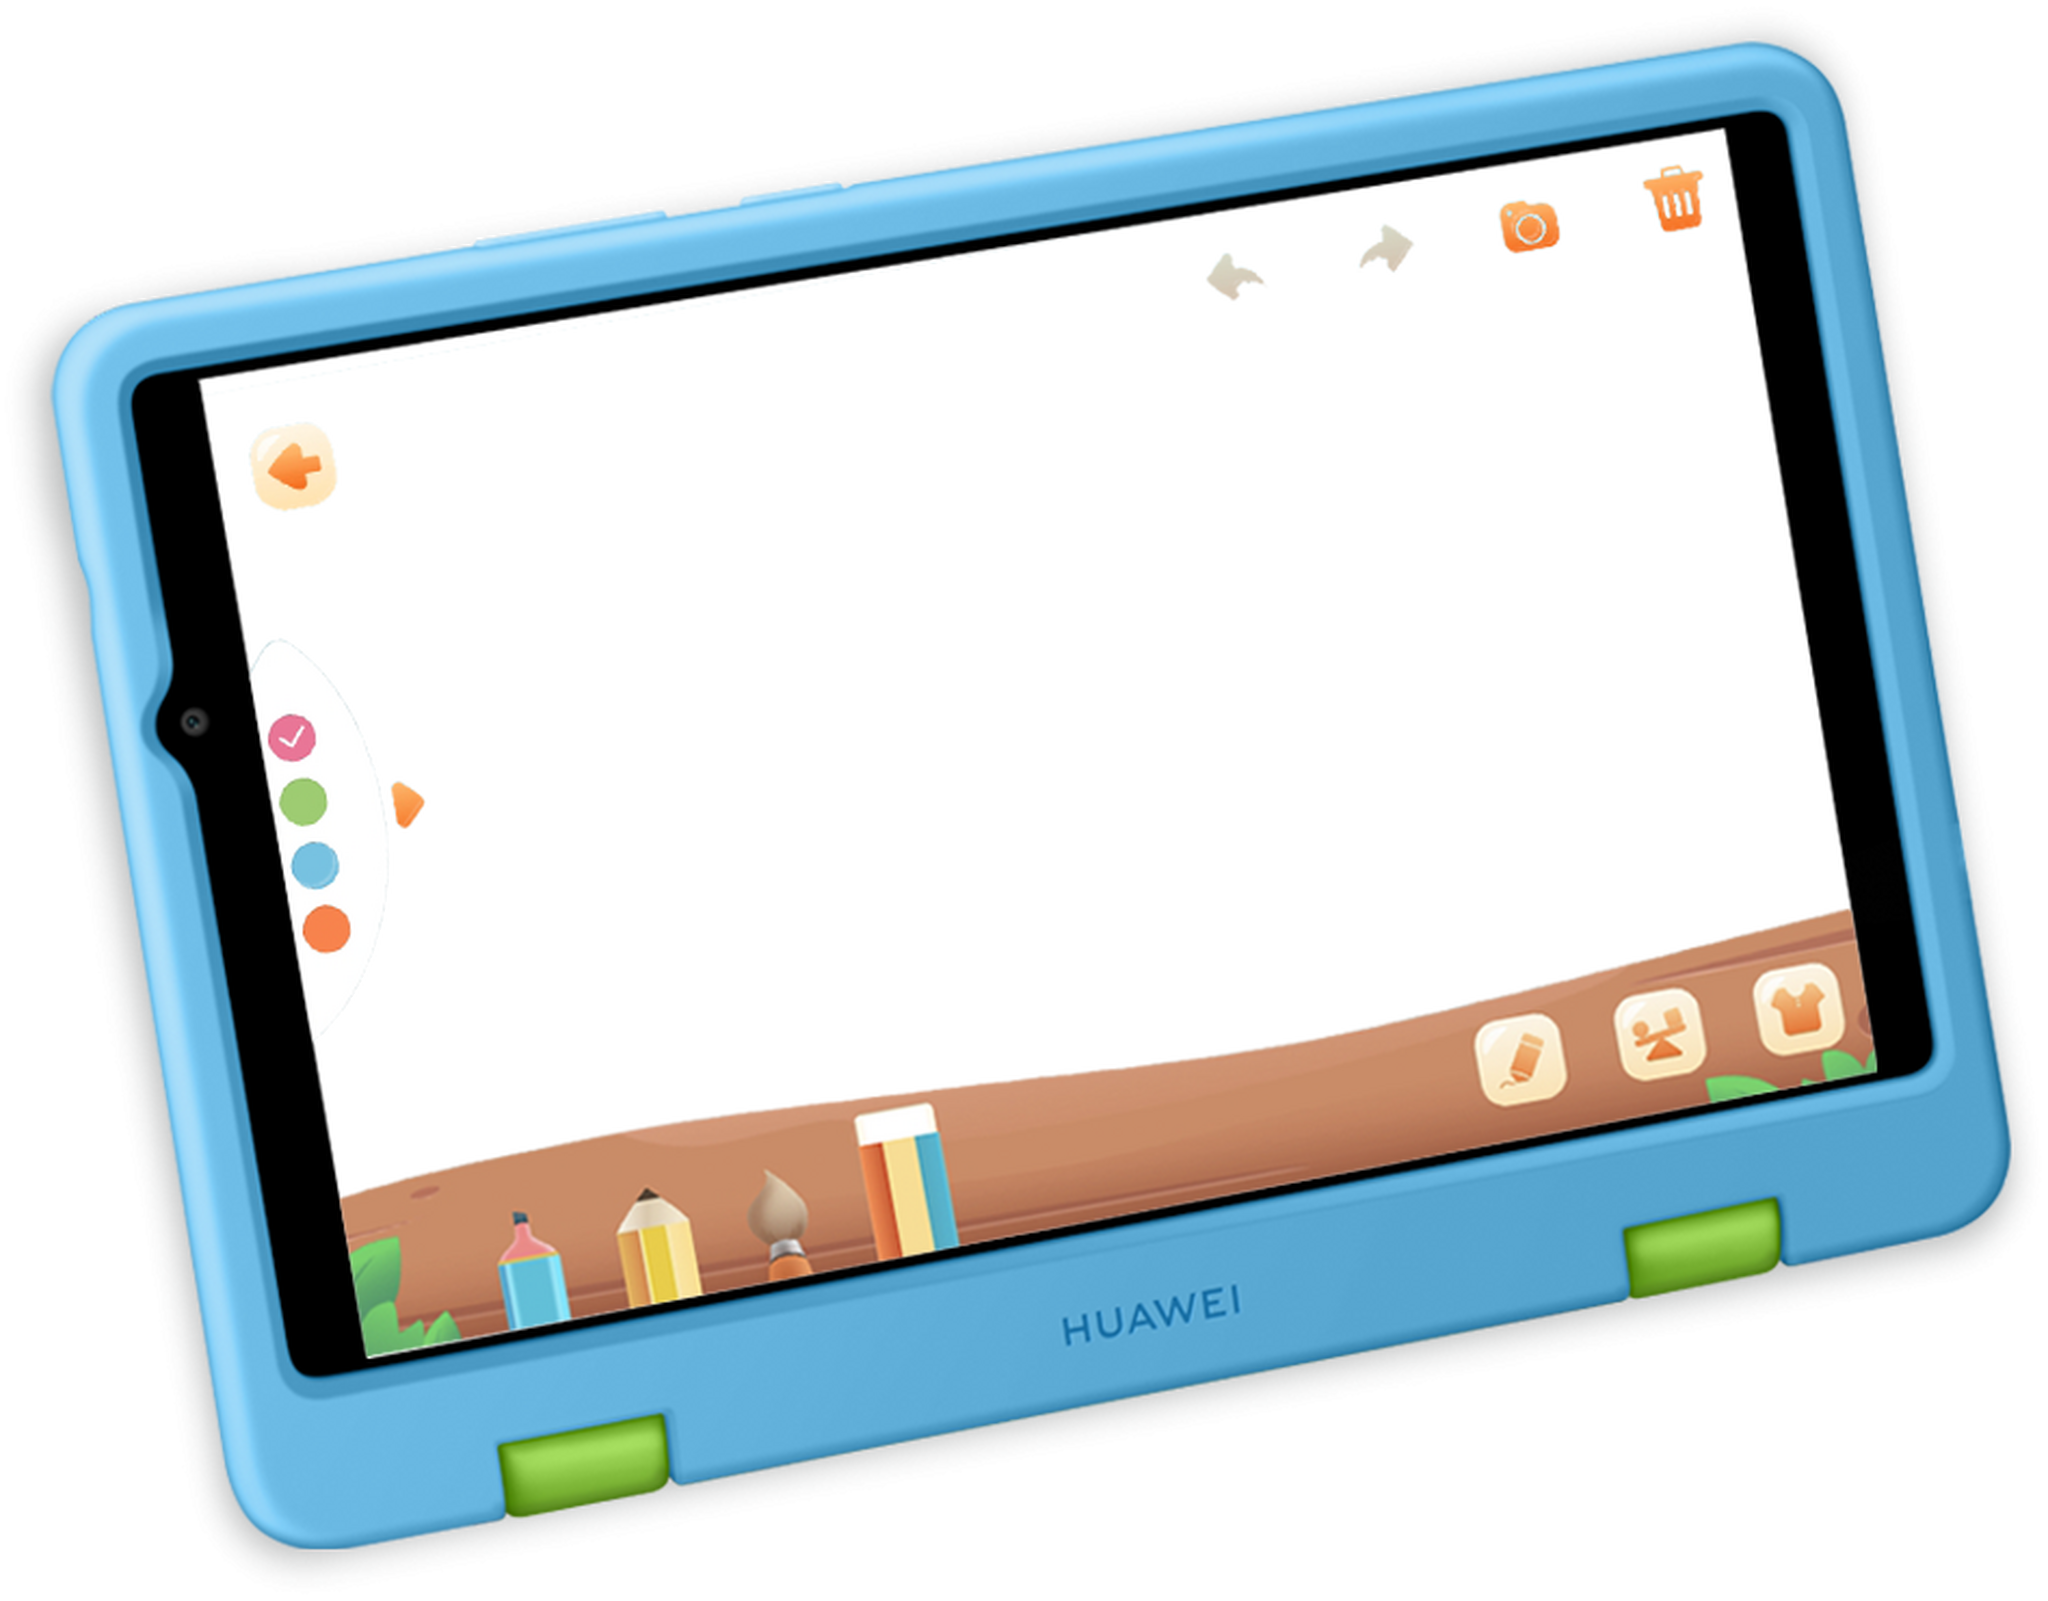 تابلت هواوي ميت باد تي 8 إصدار خاص للاطفال، واي فاي، 16 جيجابايت، 4 جي، 8 بوصة - أزرق